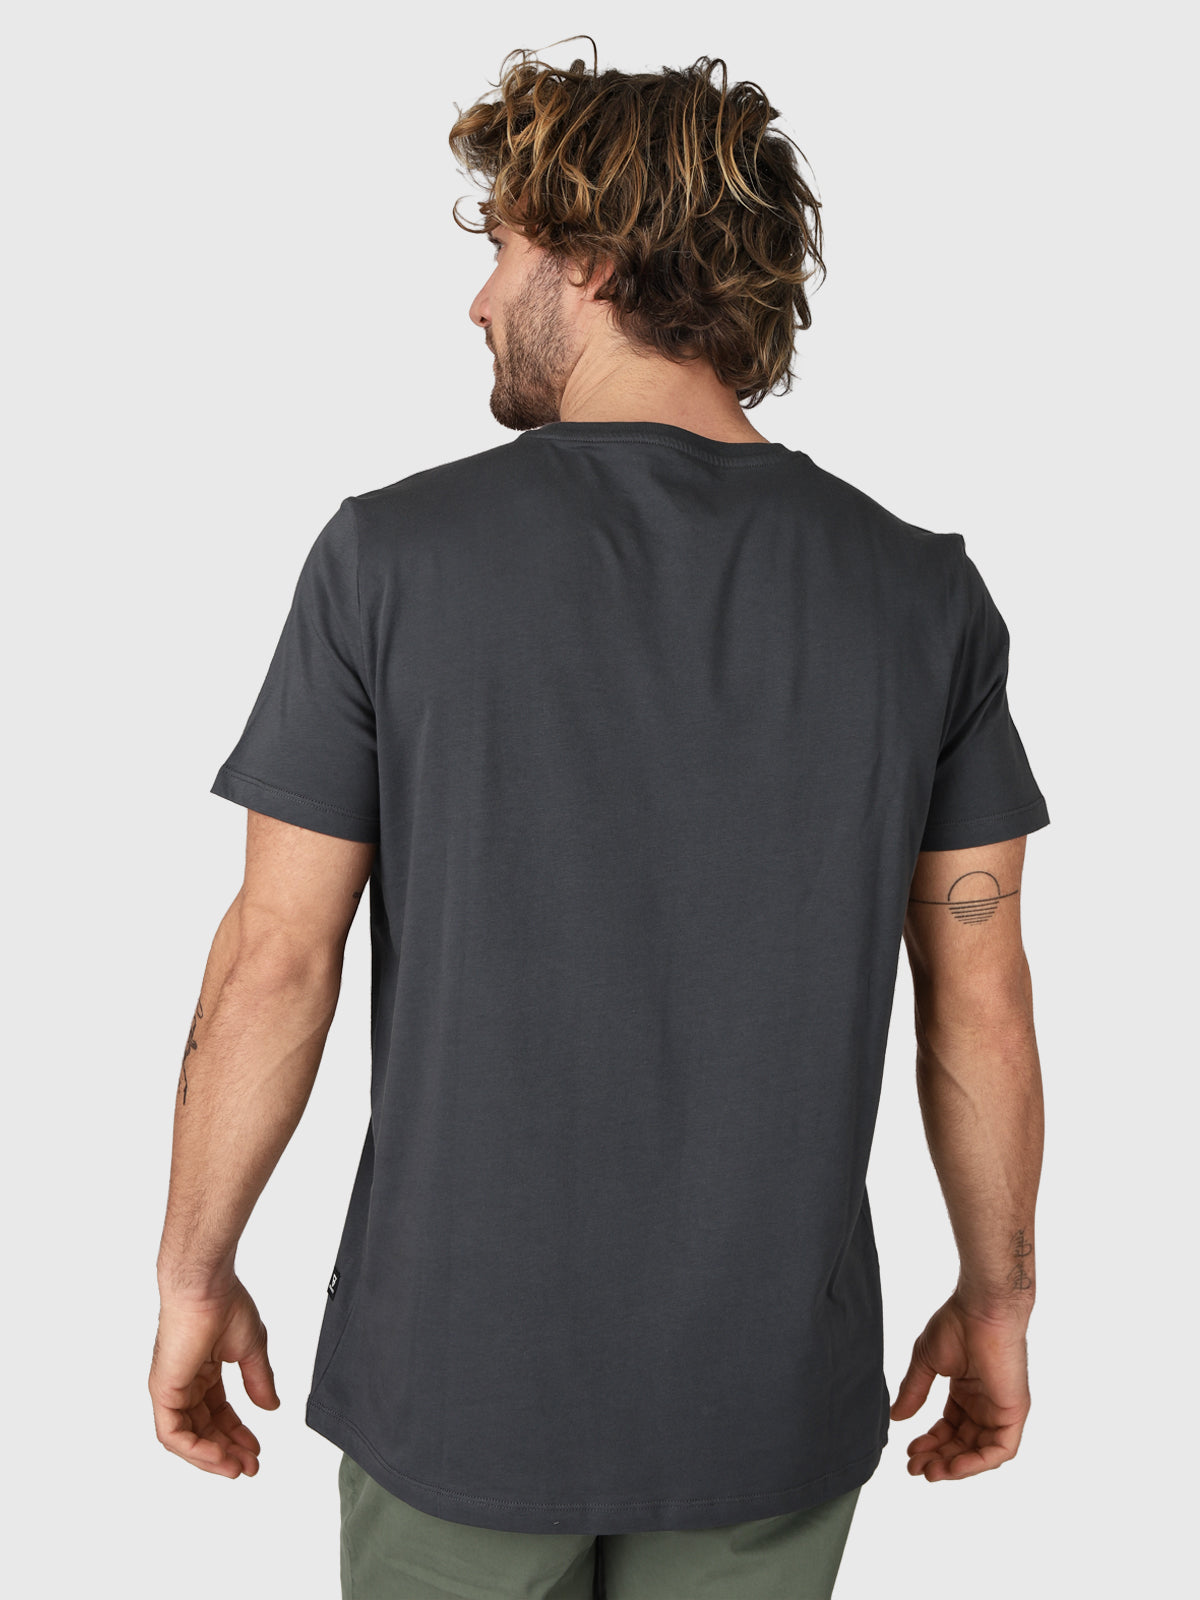 Funhorizon Herren T-Shirt | Grau